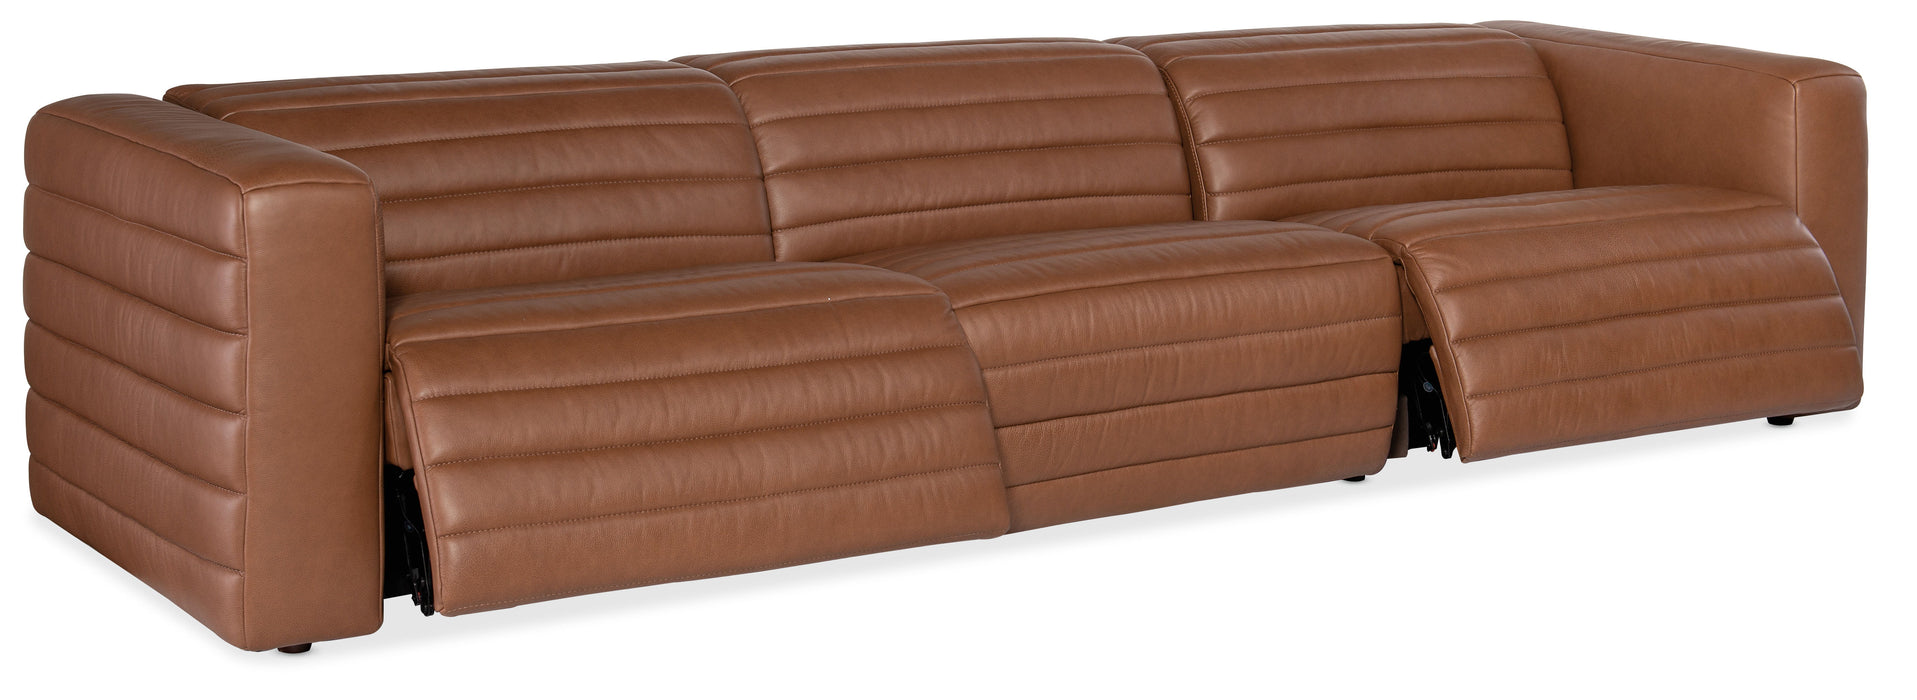 Chatelain - 3-Piece Power Sofa With Power Headrest